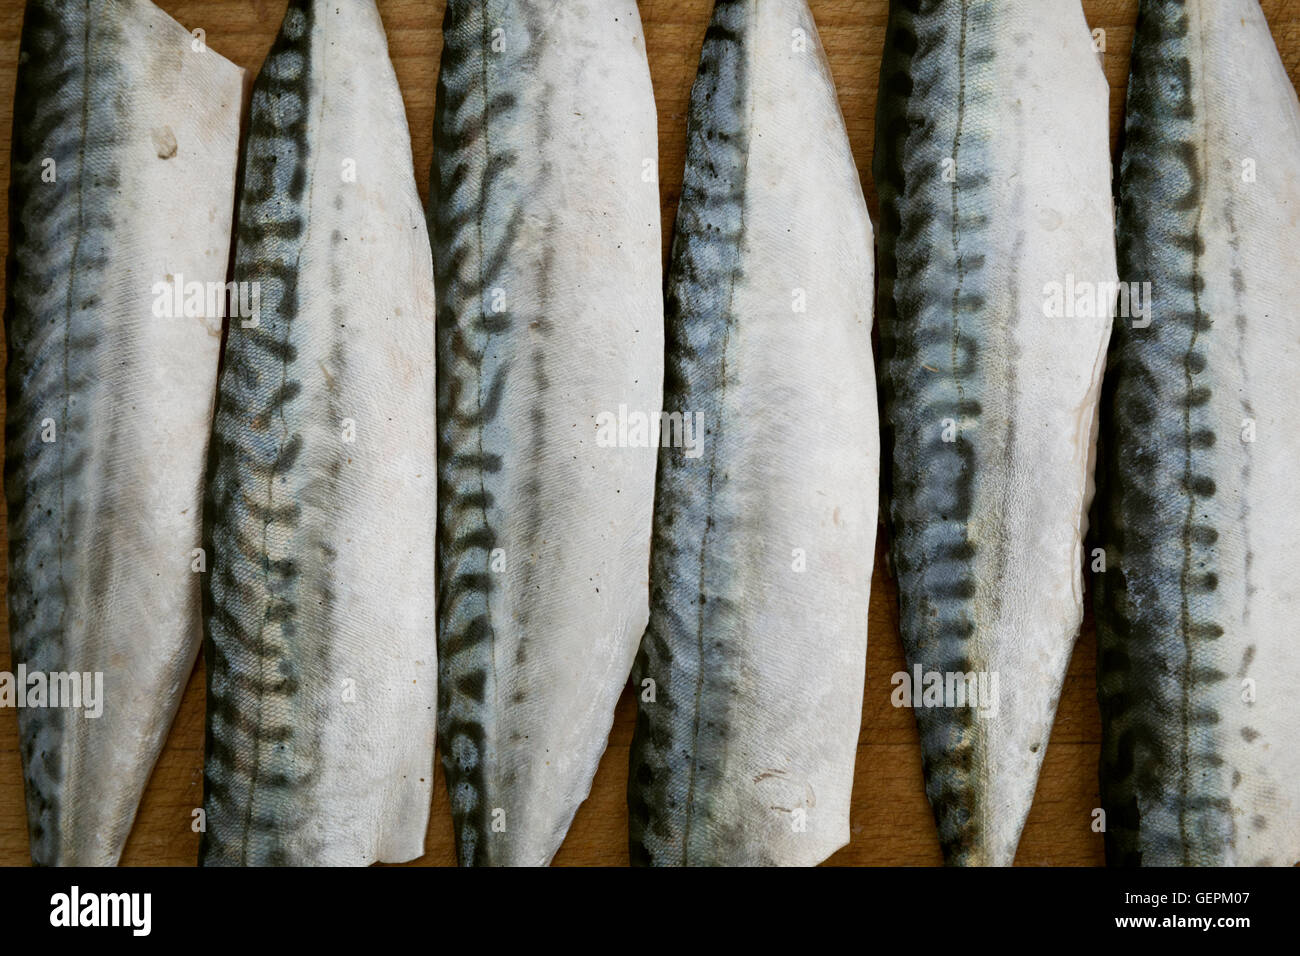 Close up of fresh Mackerel fillets. Stock Photo